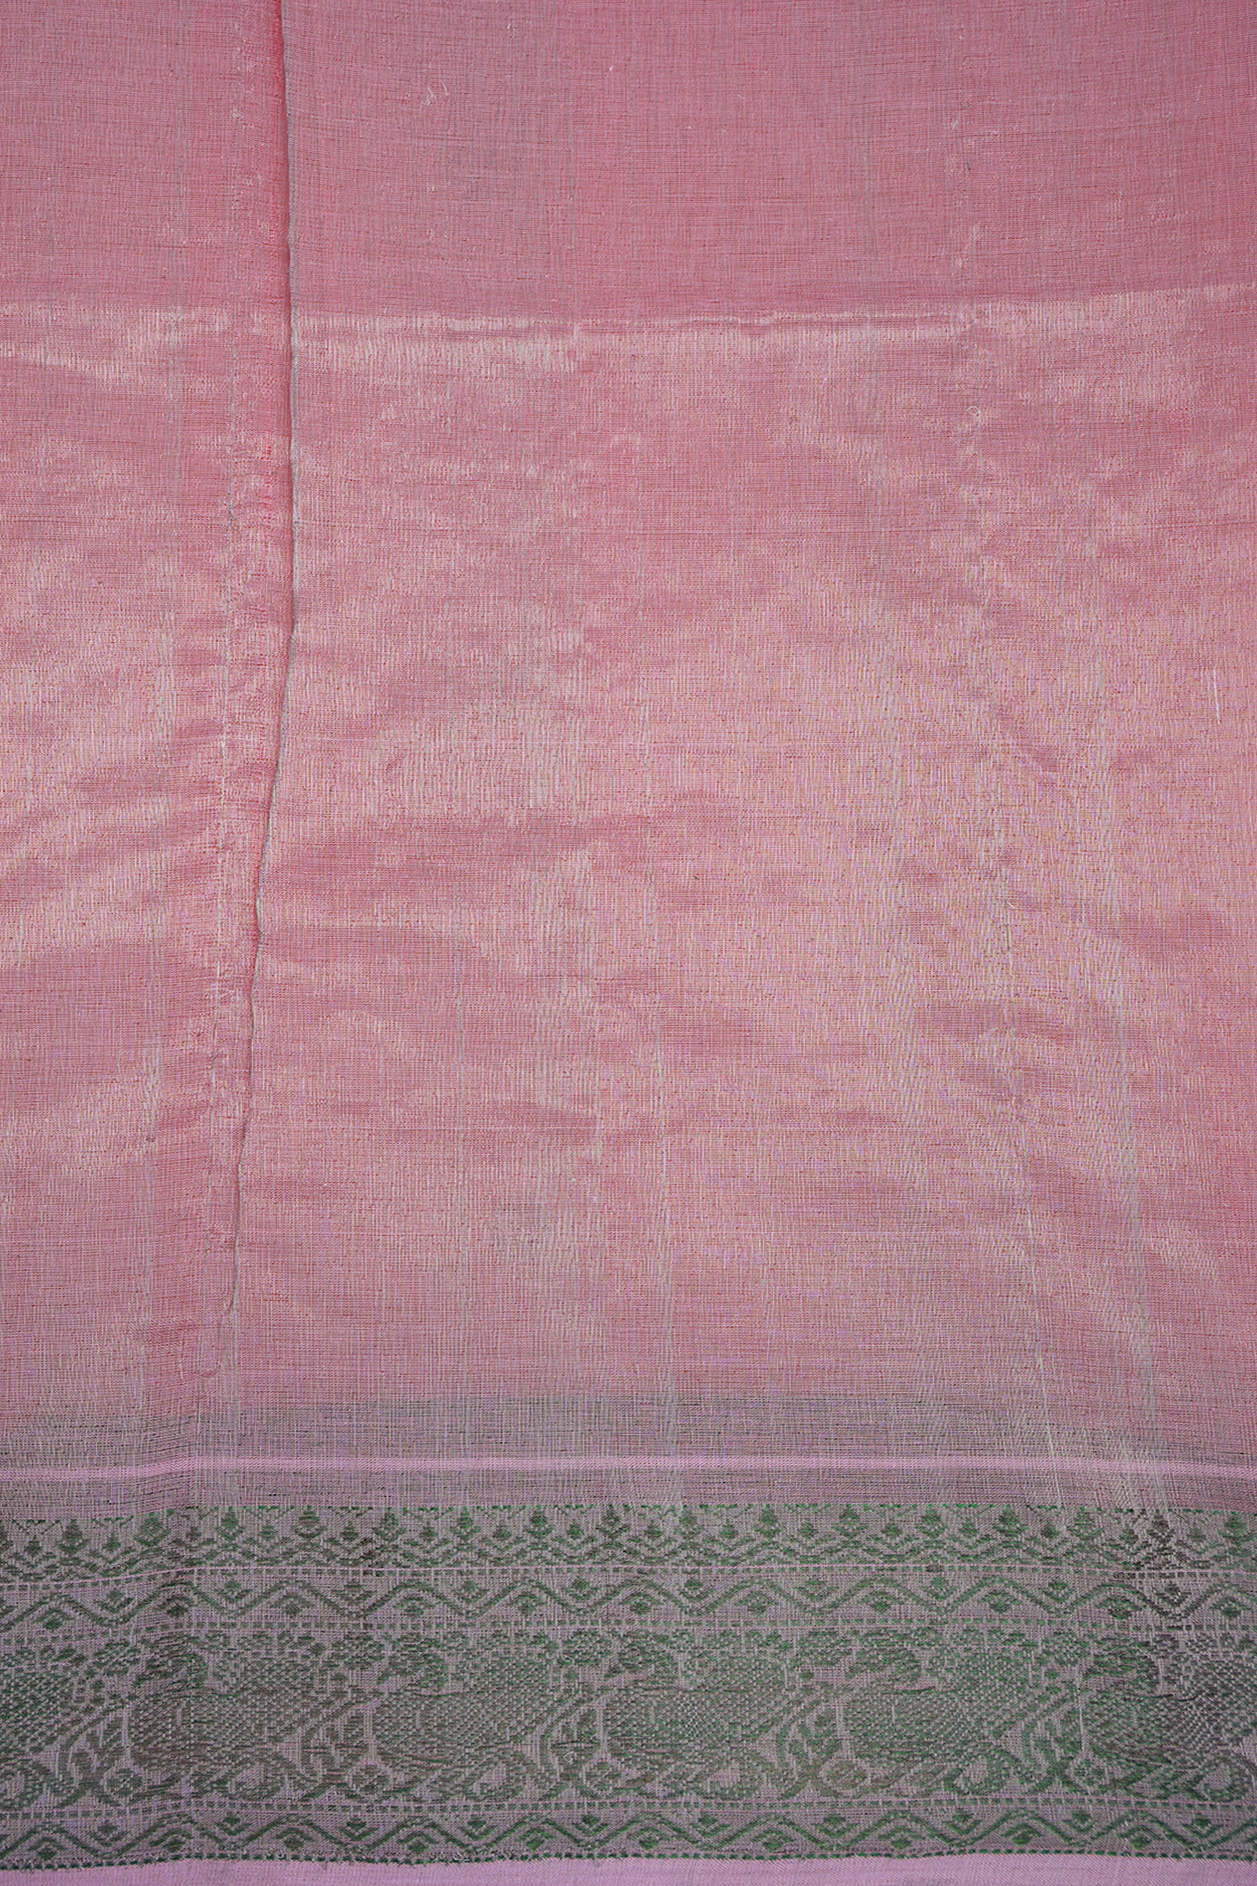 Allover Rudraksh Design Coral Pink Silk Cotton Saree